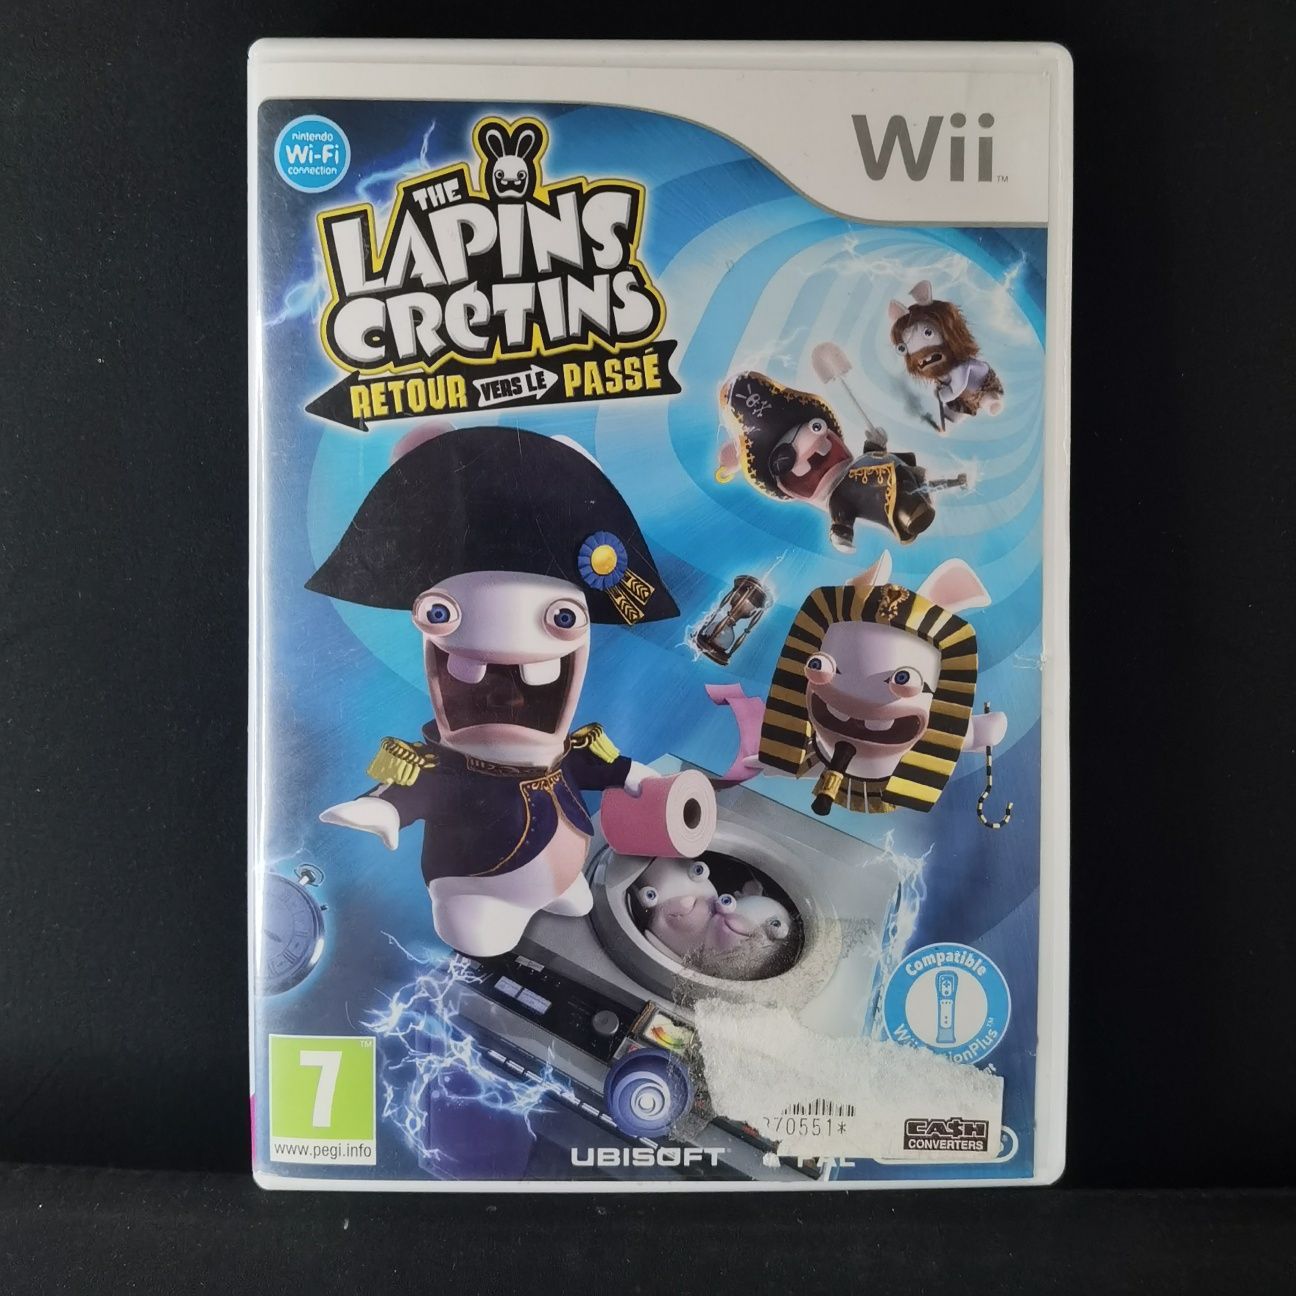 The Lapins Cretins Nintendo Wii